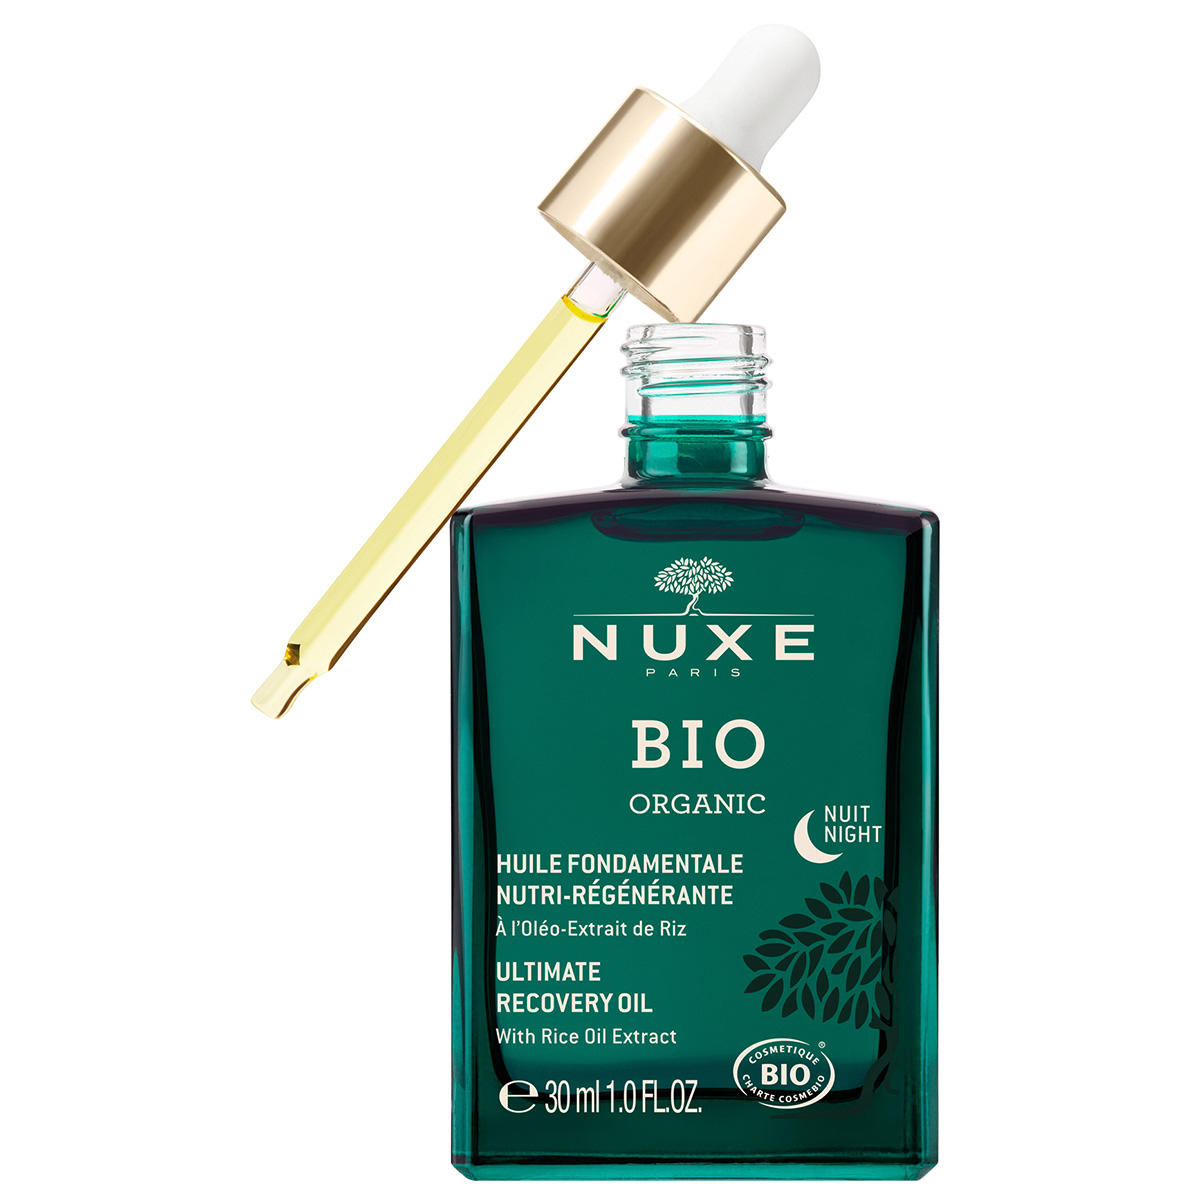 NUXE BIO Regenerating night oil 30 ml - 2